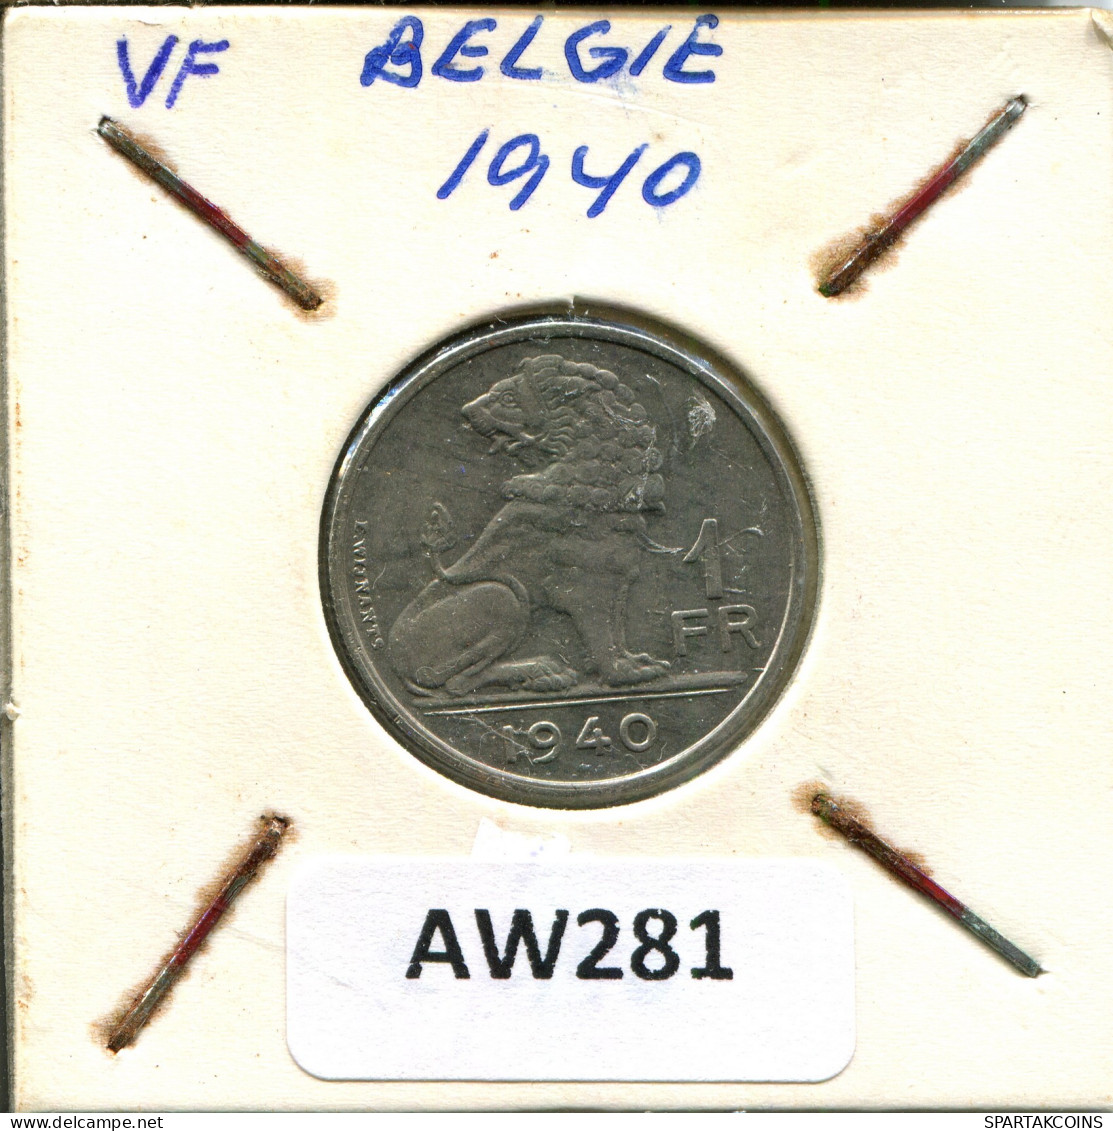 1 FRANC 1940 BELGIE-BELGIQUE BELGIUM Coin #AW281.U - 1 Frank